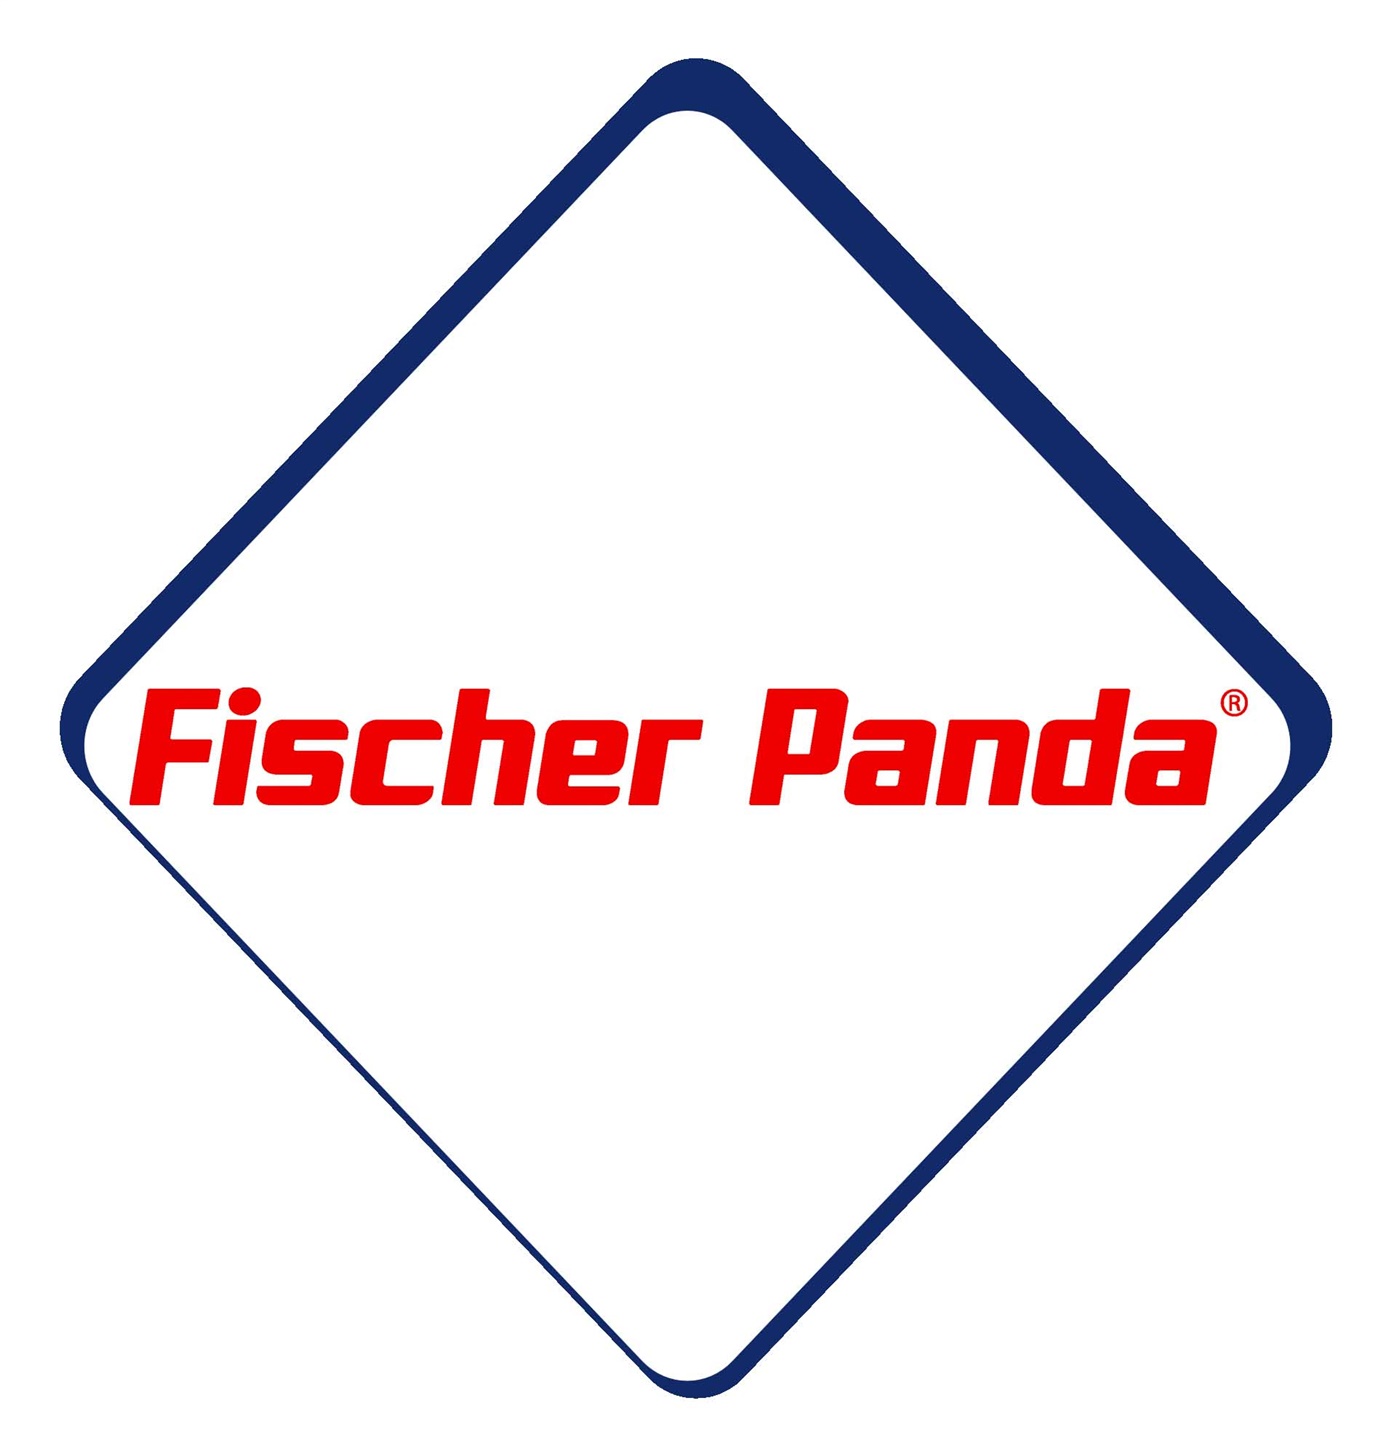 FISCHER PANDA